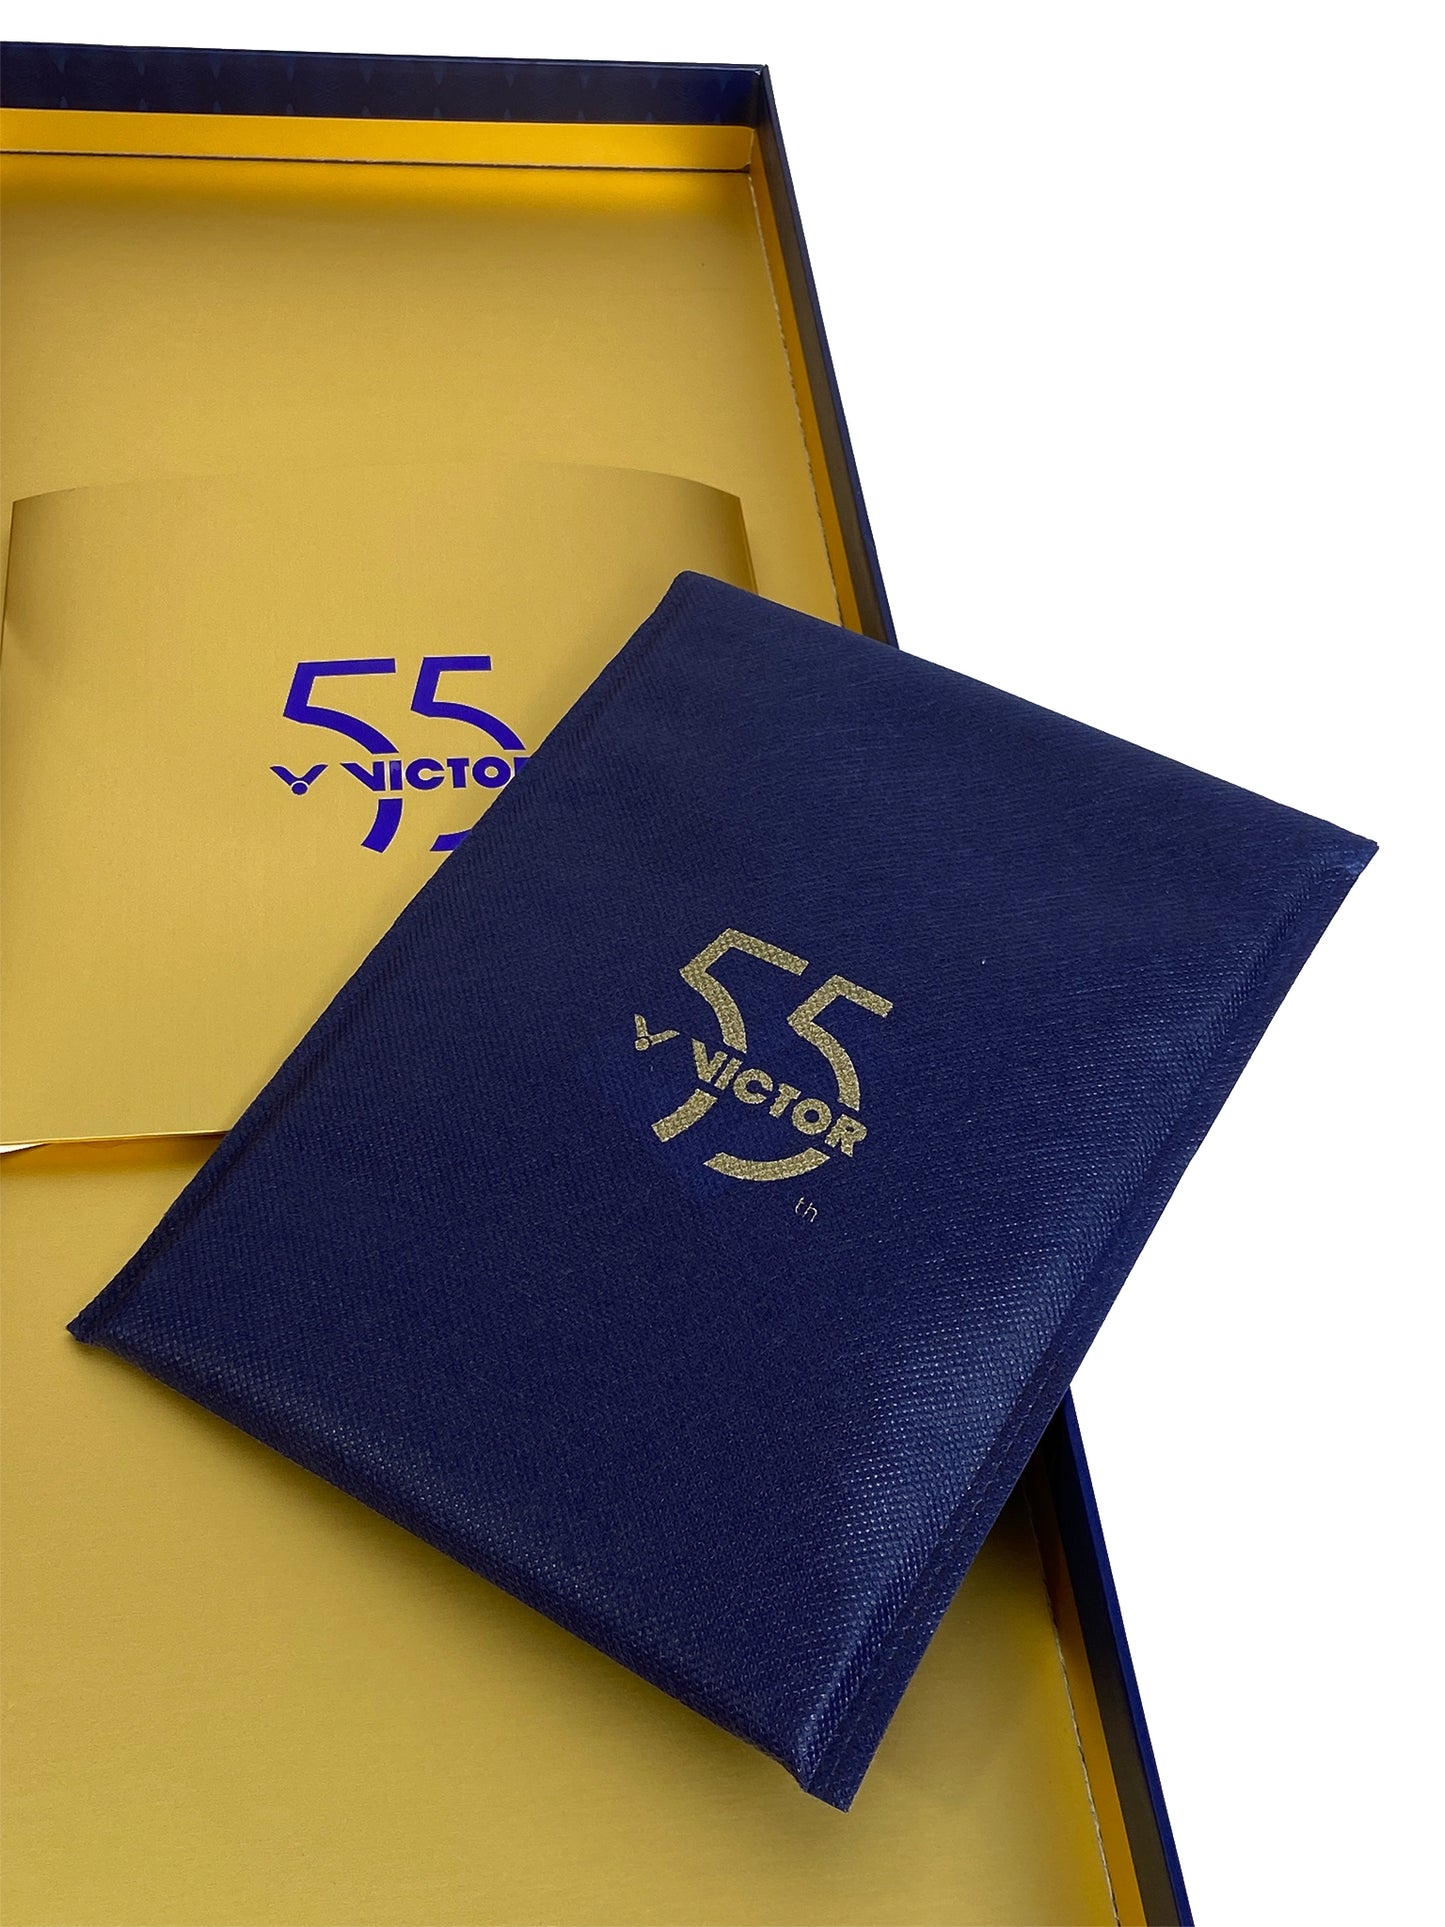 Victor 55th Anniversary Brave Sword 12 DLUX Gift Box Set (BRS-12-DLUX-GB-B)